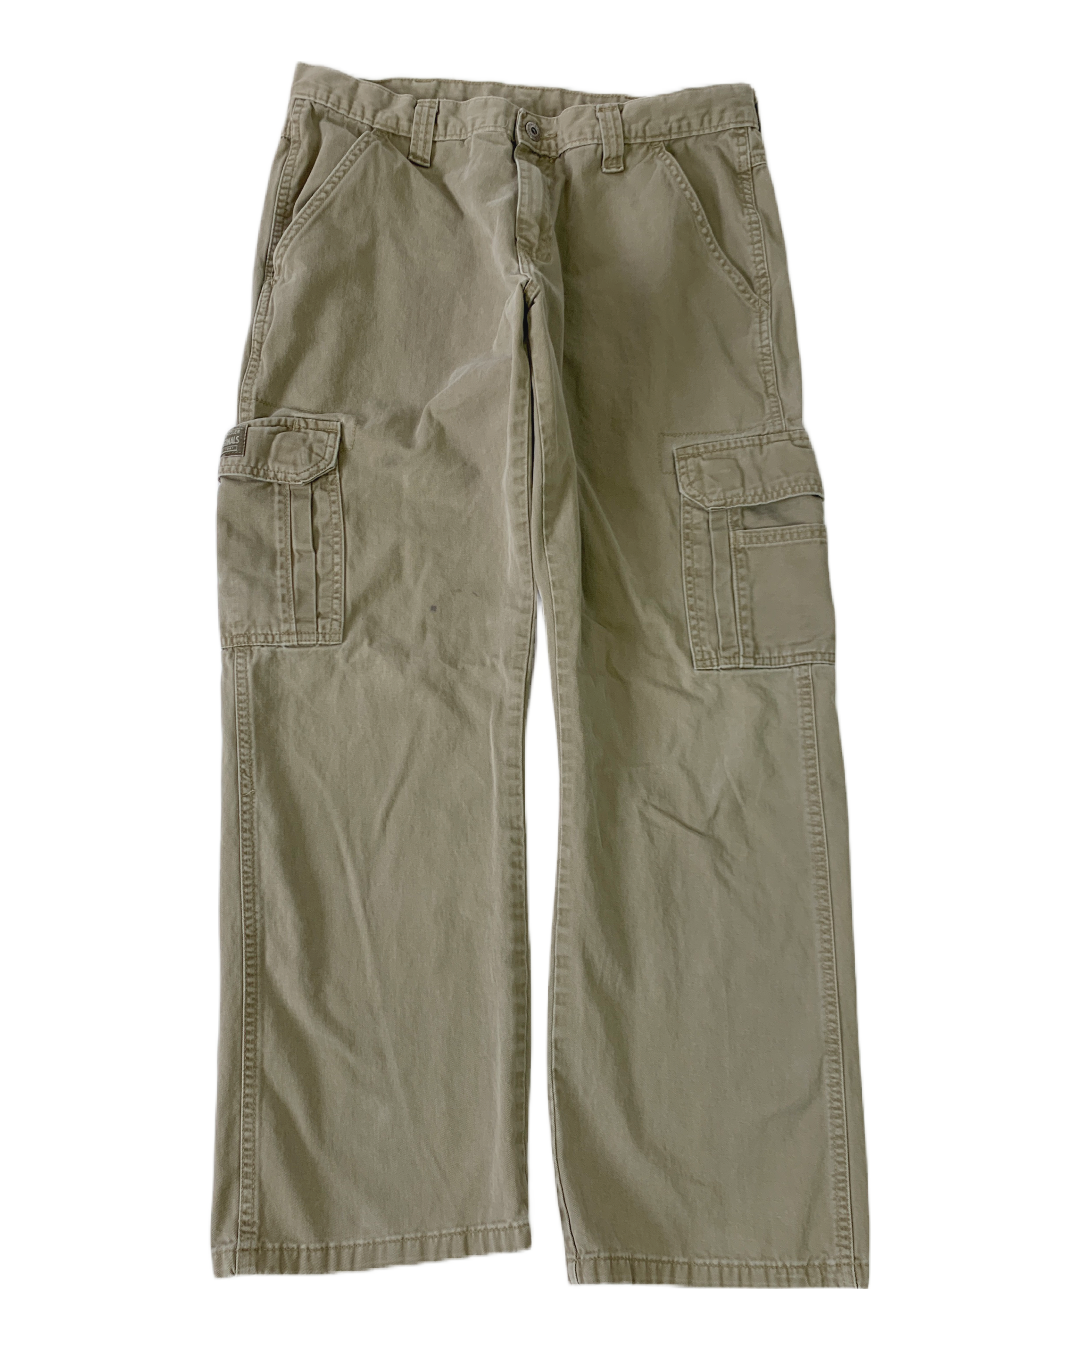 Wrangler Carpenter Cargo Vintage Pants - 34 x 30